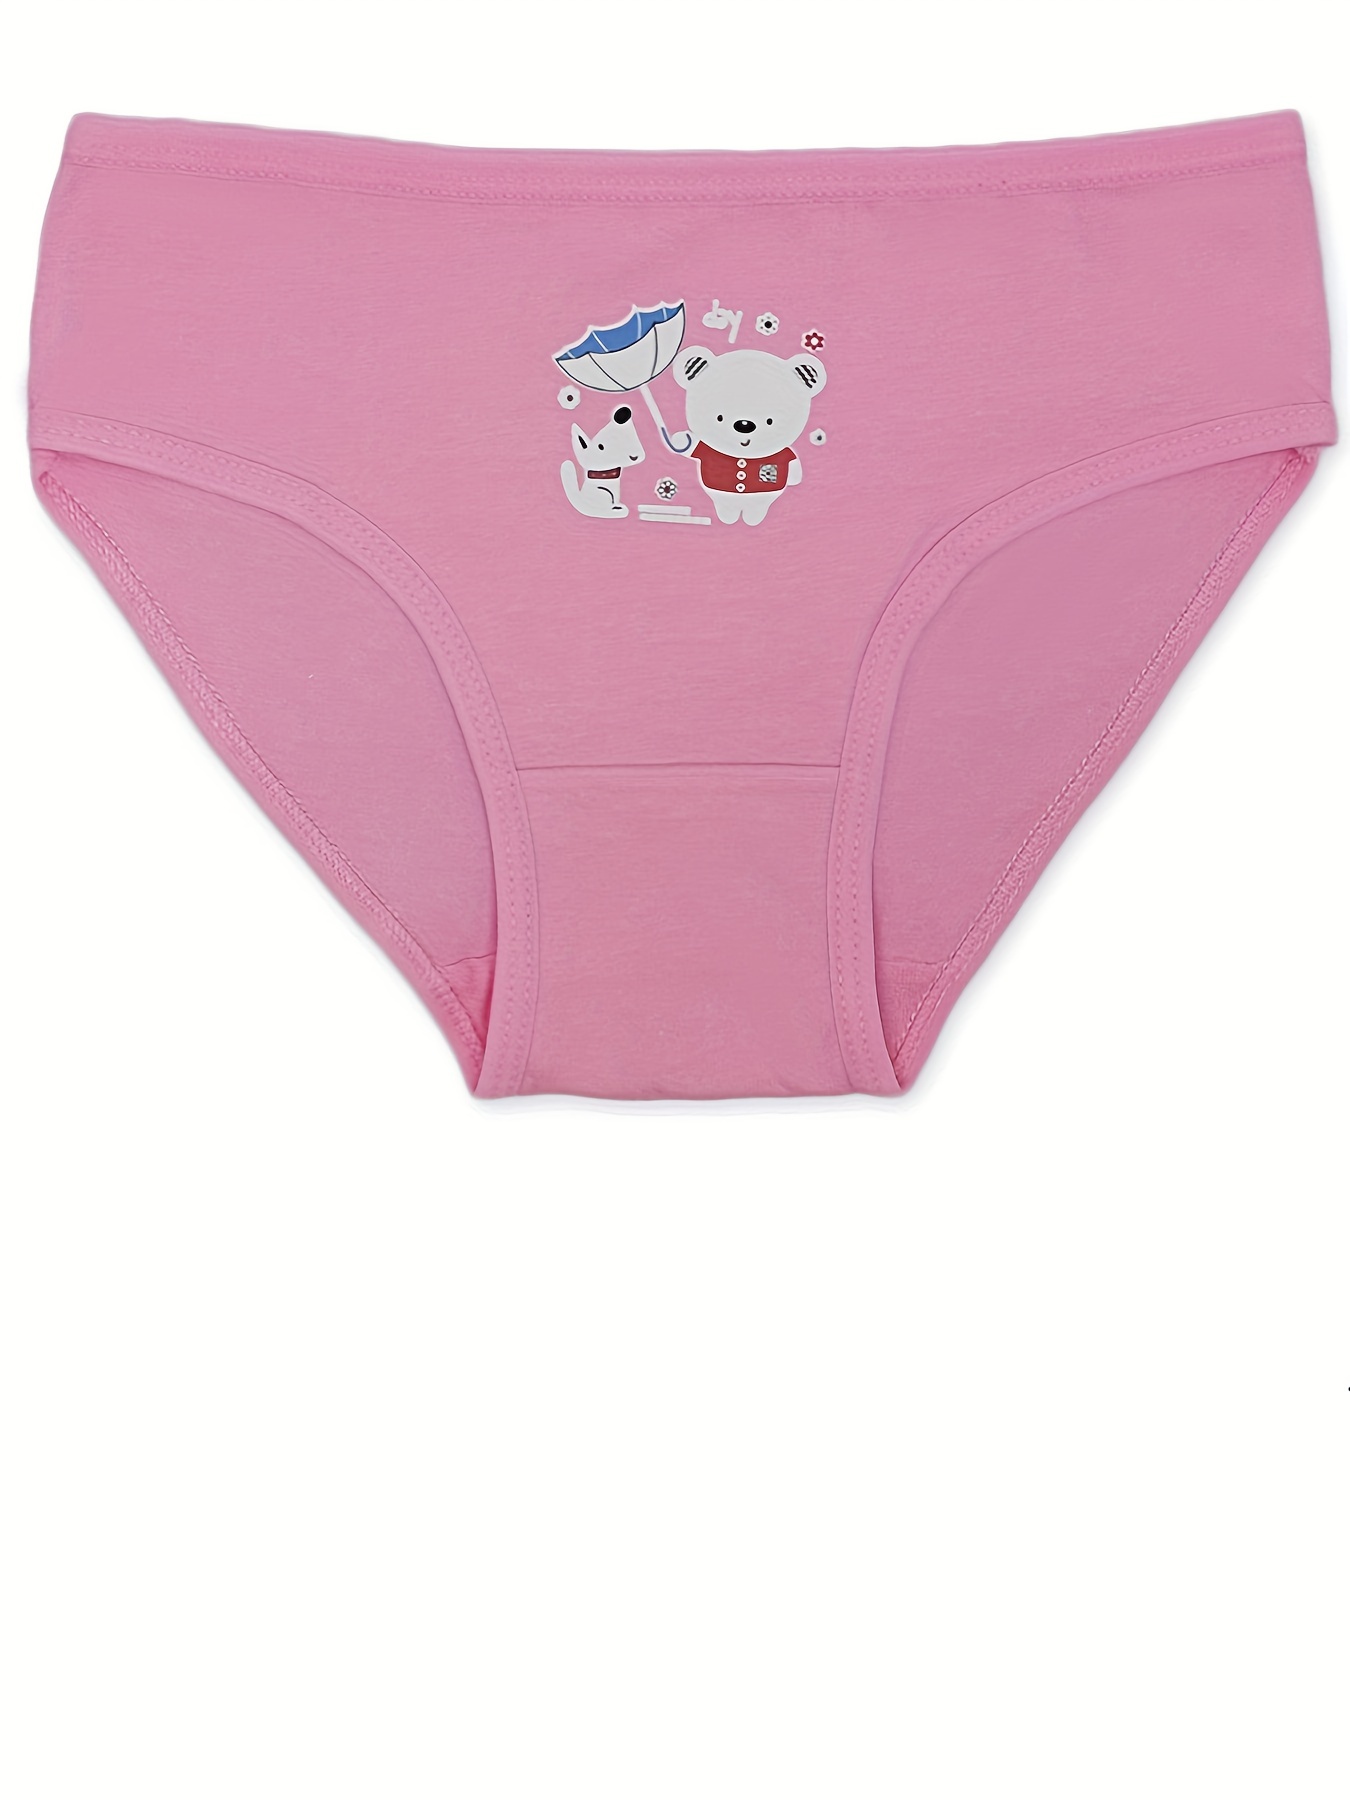 4PCS Hello Kitty 2-10Y Children Brief Underwear High Quality Cotton Girls  Panties Cute Cat Pattern